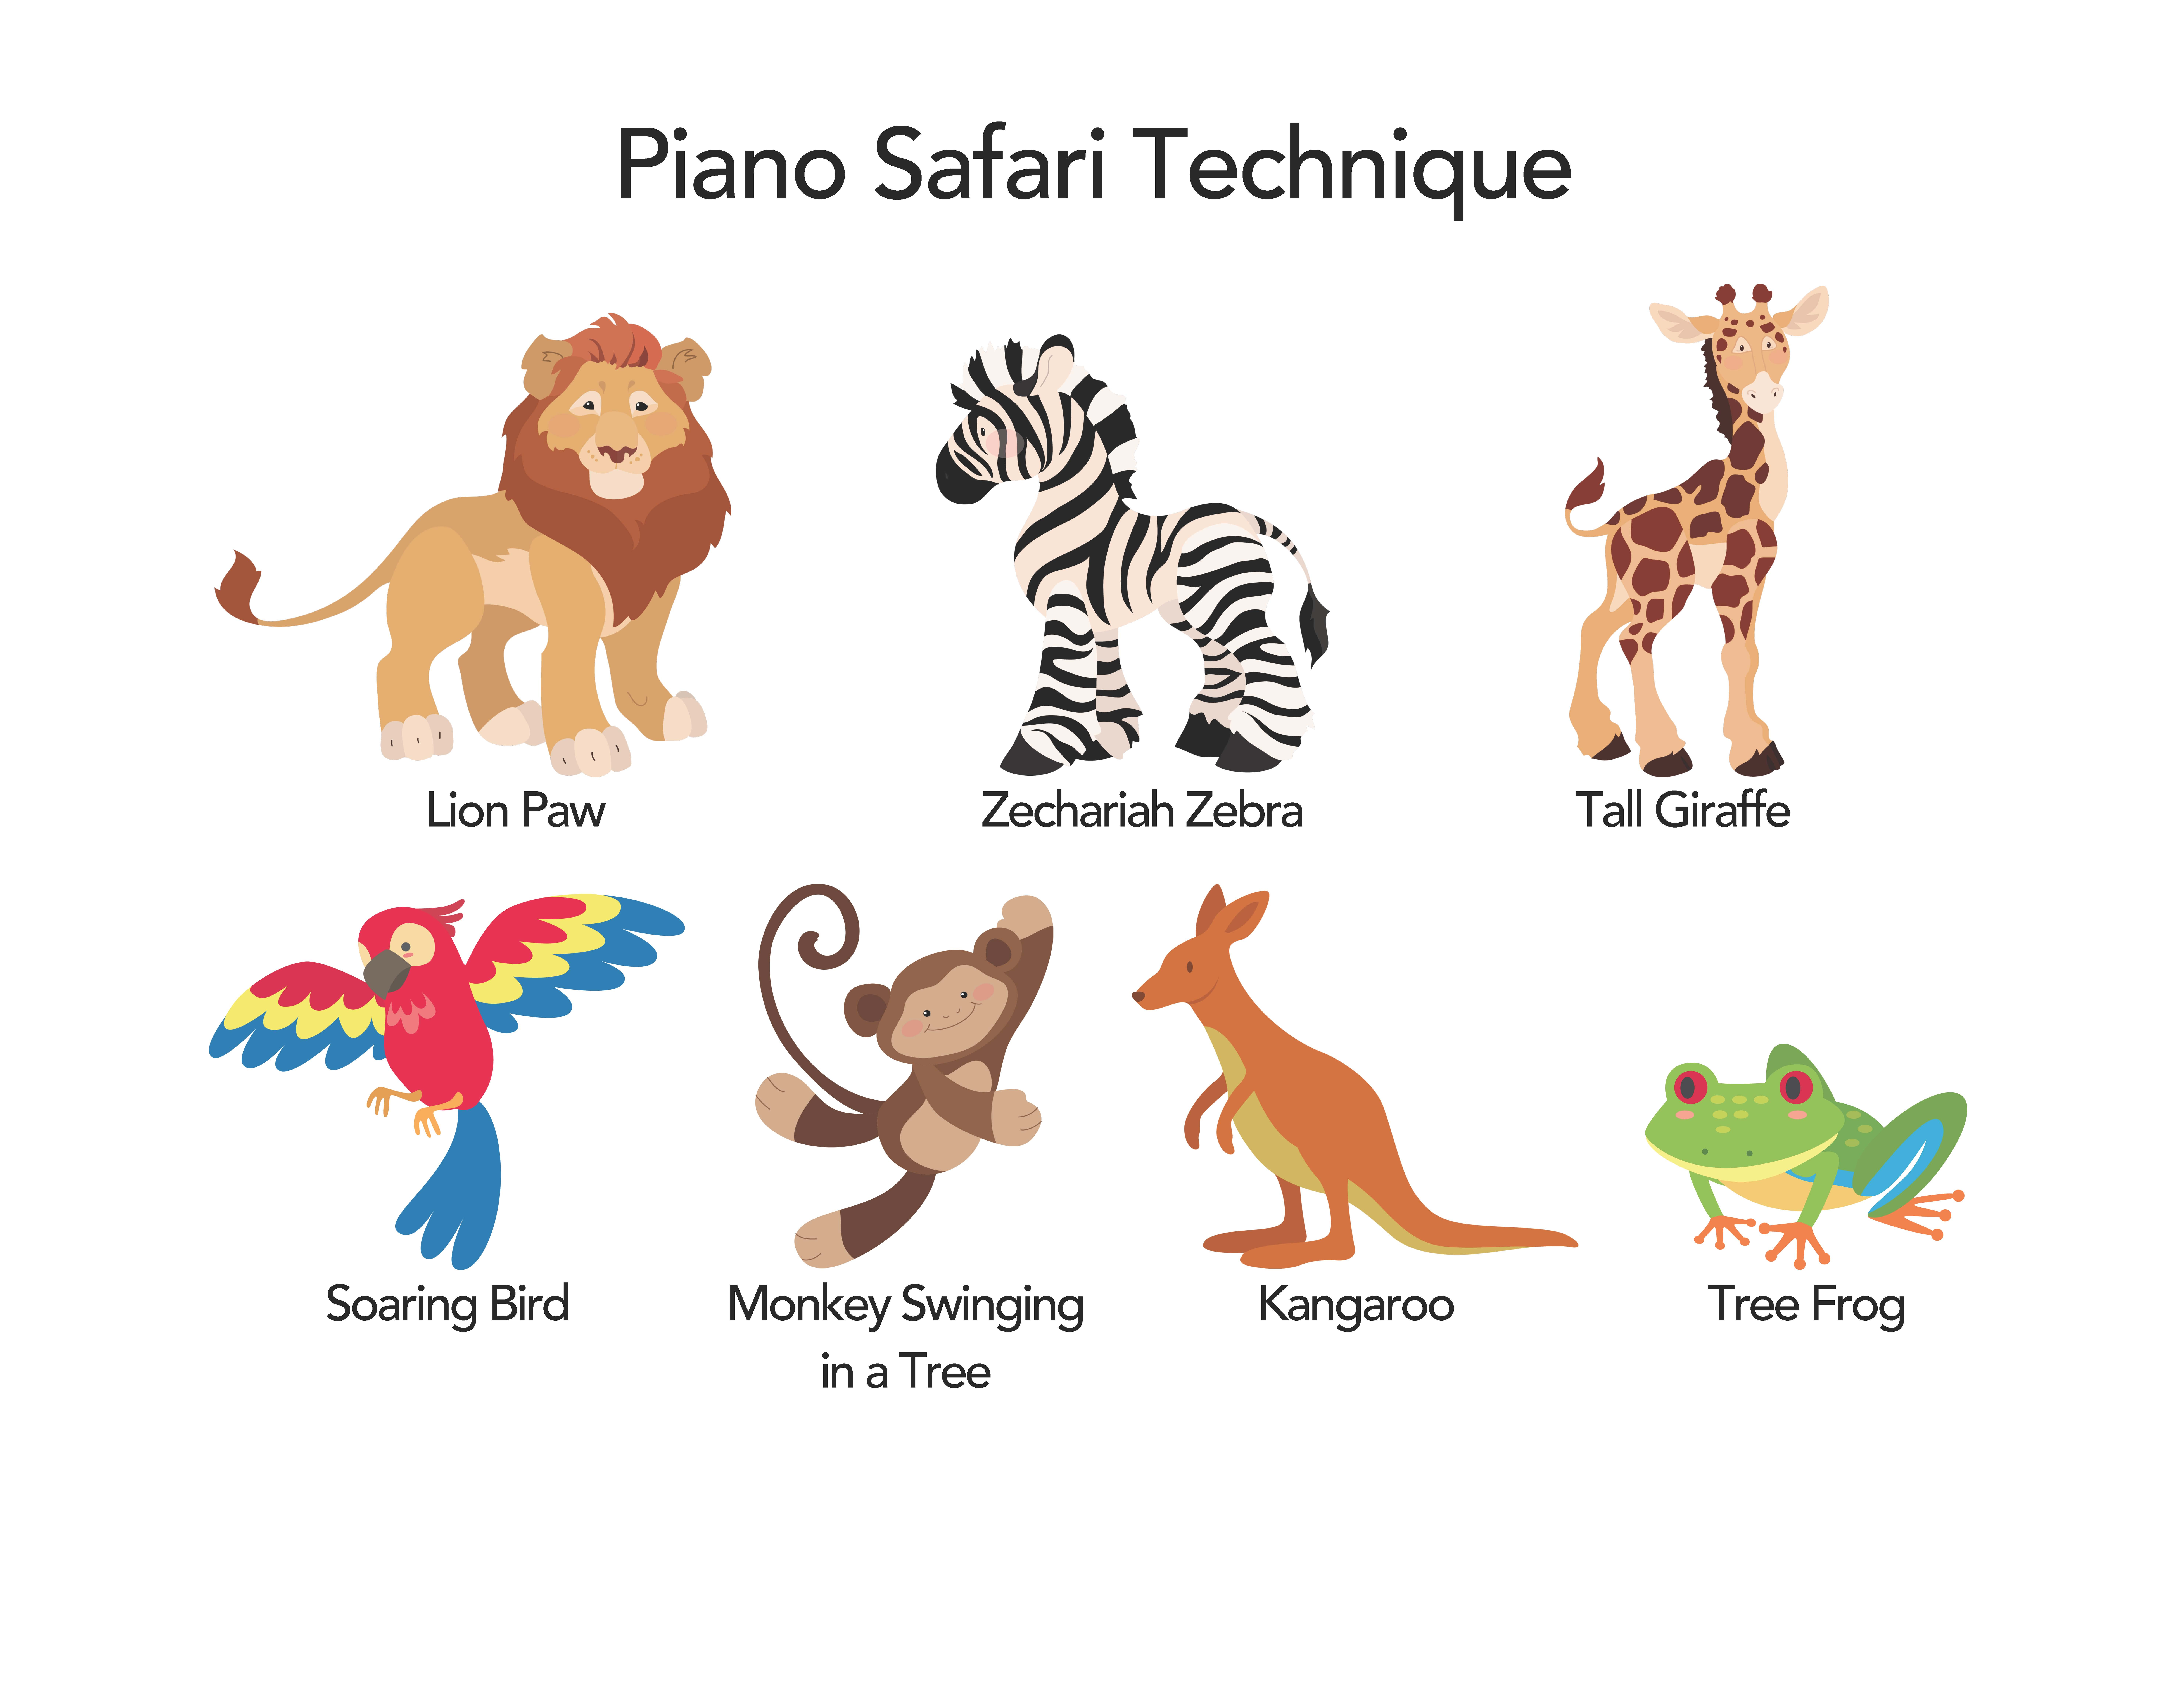 piano safari reminder videos